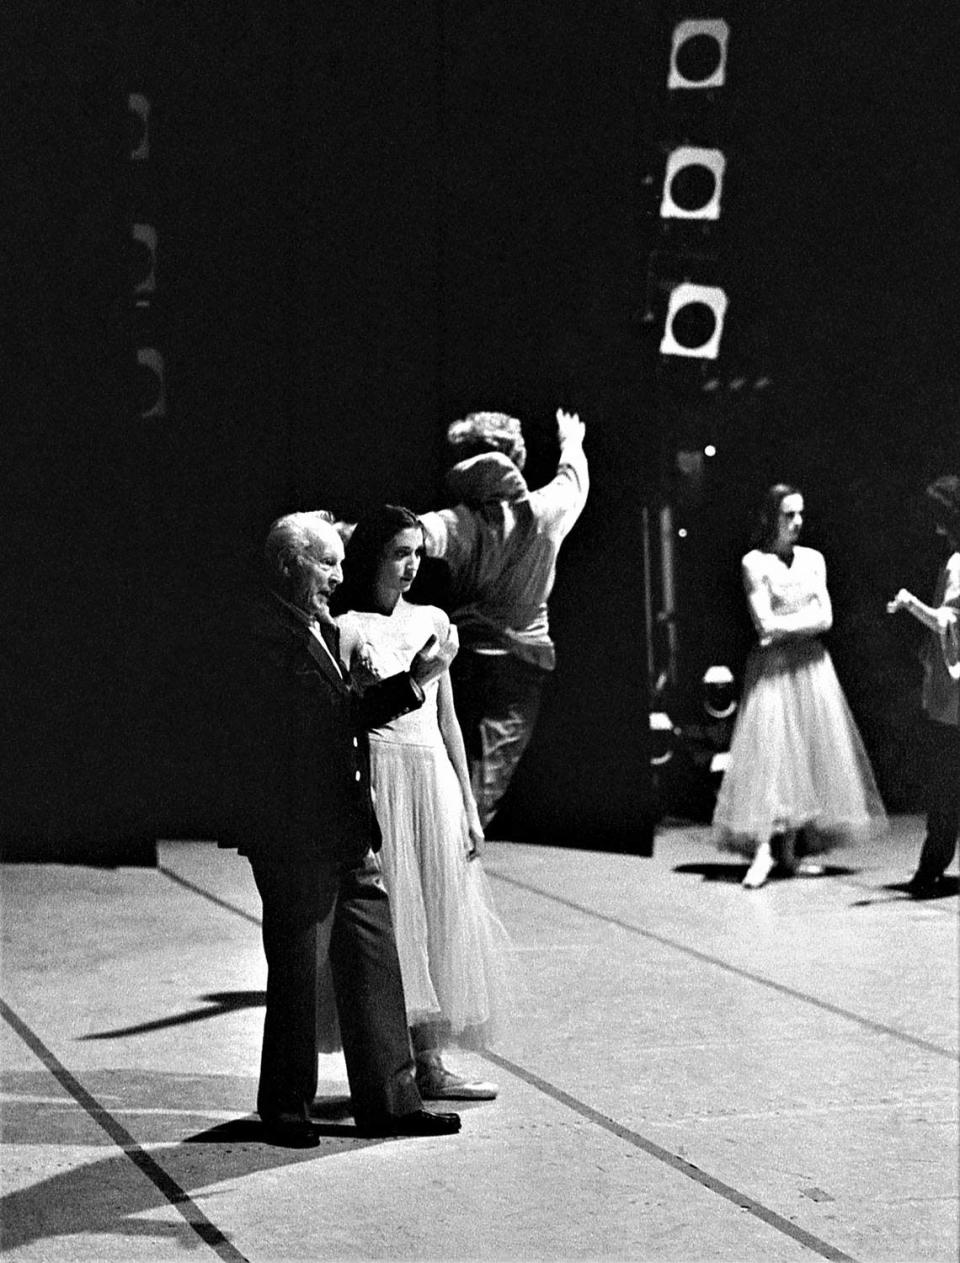 La directora artística de Miami City Ballet, Lourdes Lopez, fue alumna del famoso coreógrafo George Balanchine.